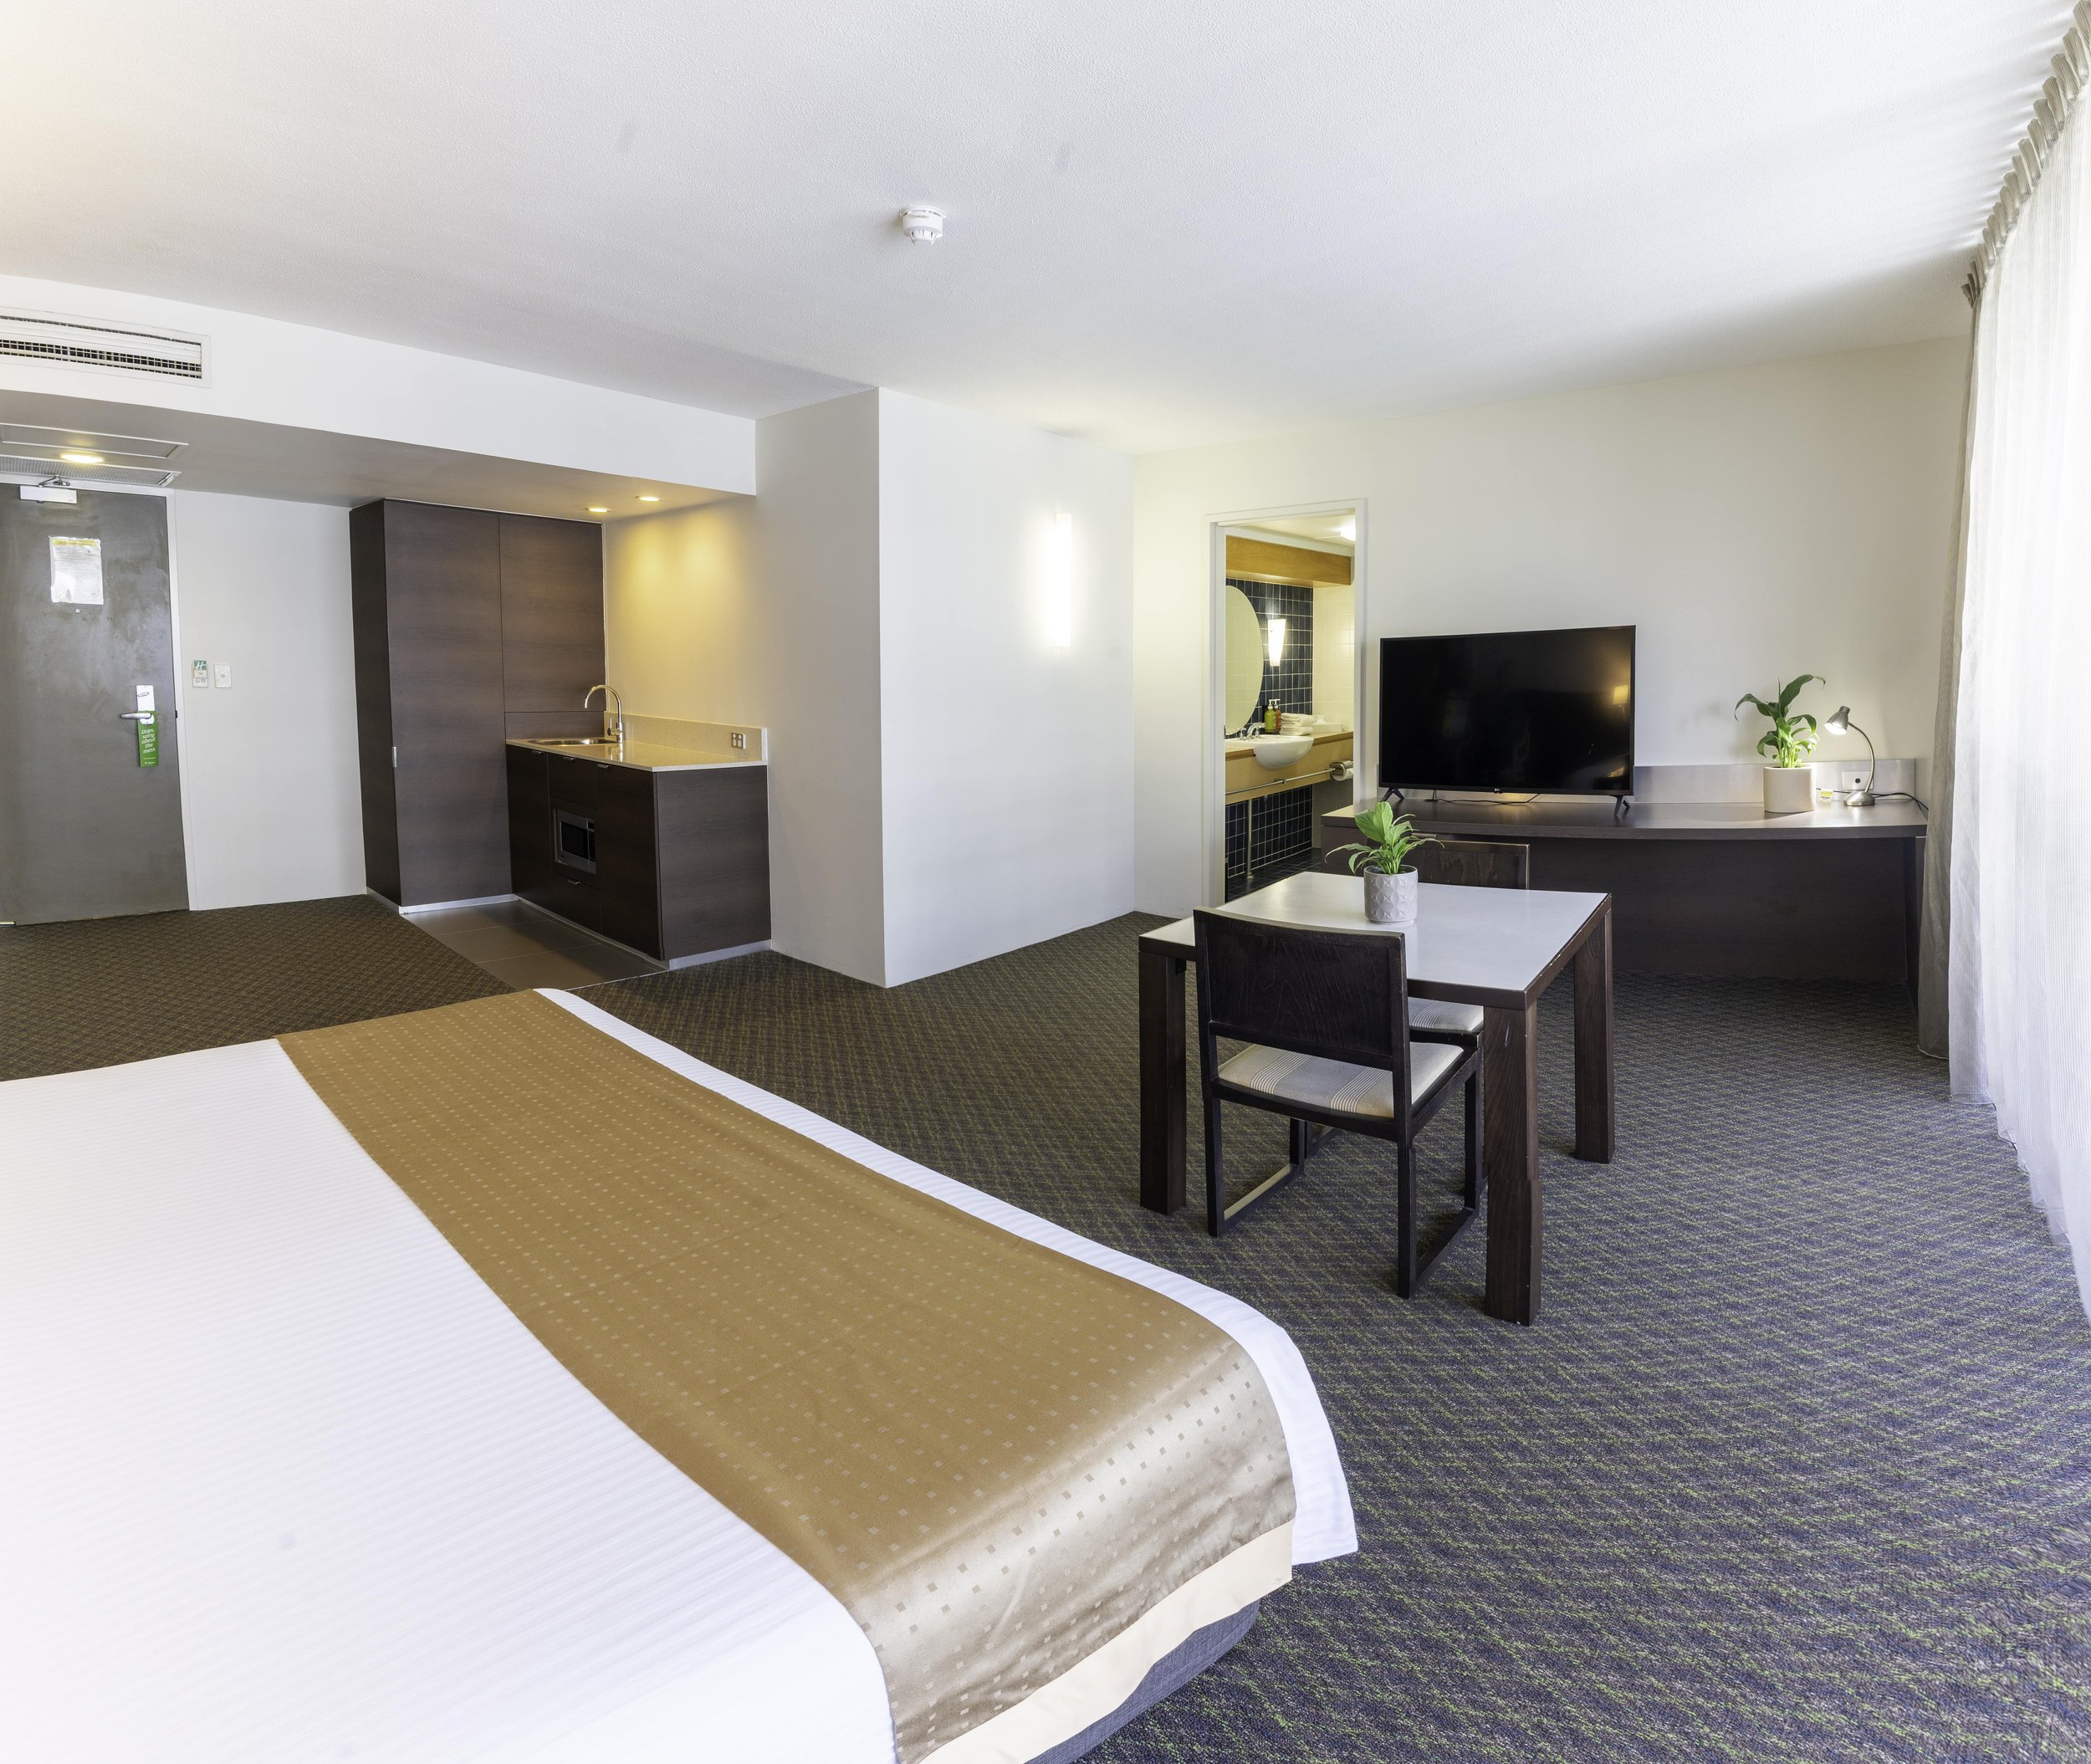 HOL- Hotel Rooms - 080623-27-min.resized.jpg